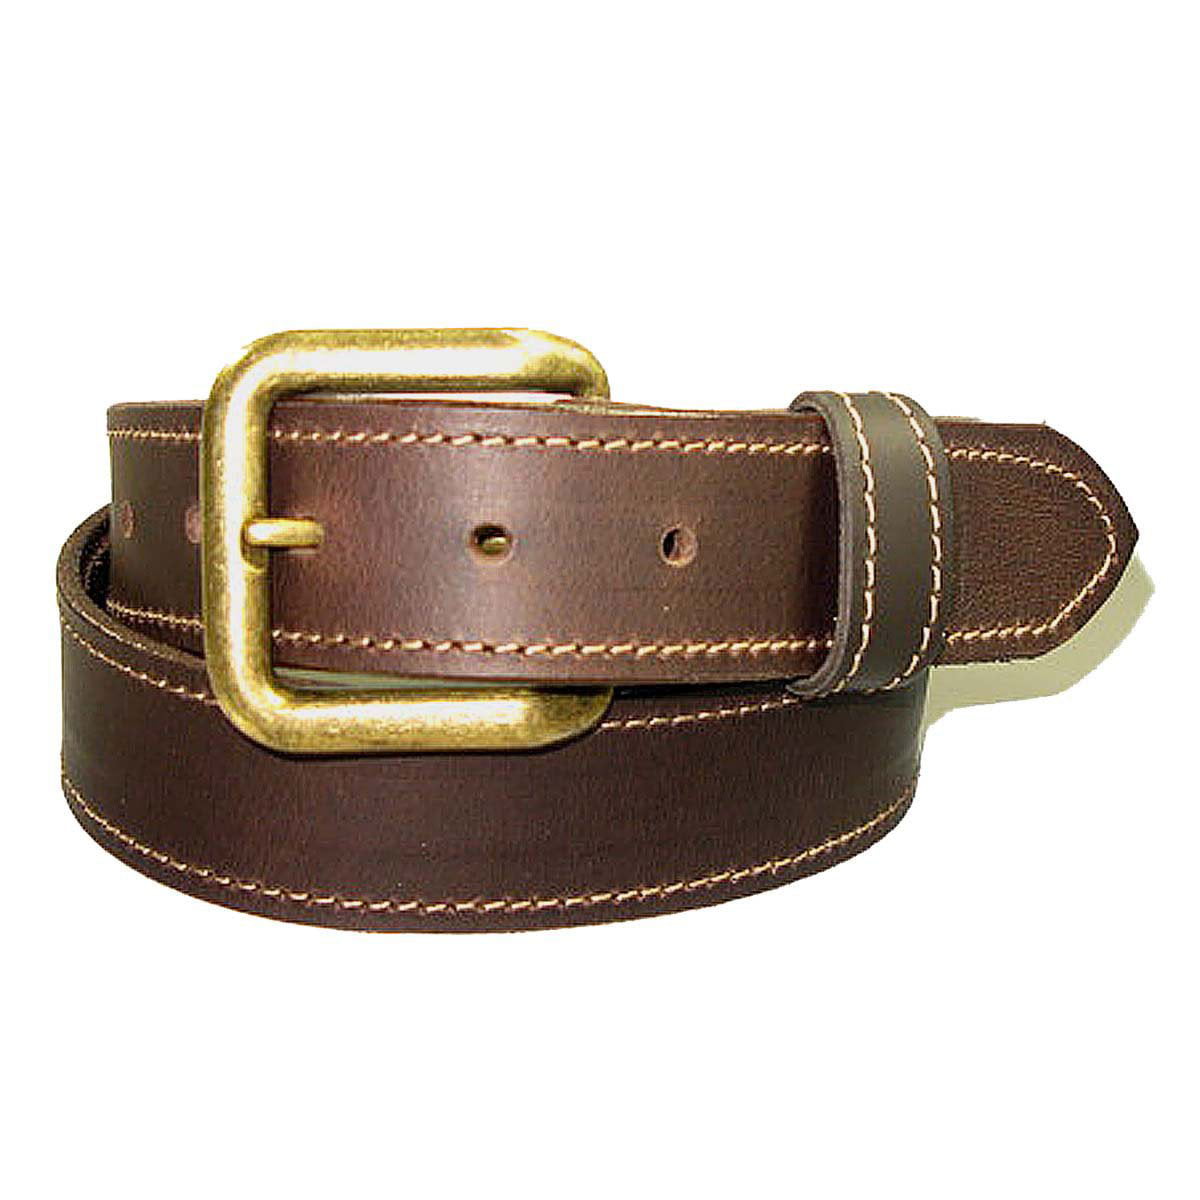 Saffiano Leather Belt Mens Reversible belts BLACK BROWN Gunmetal buckle Two side 